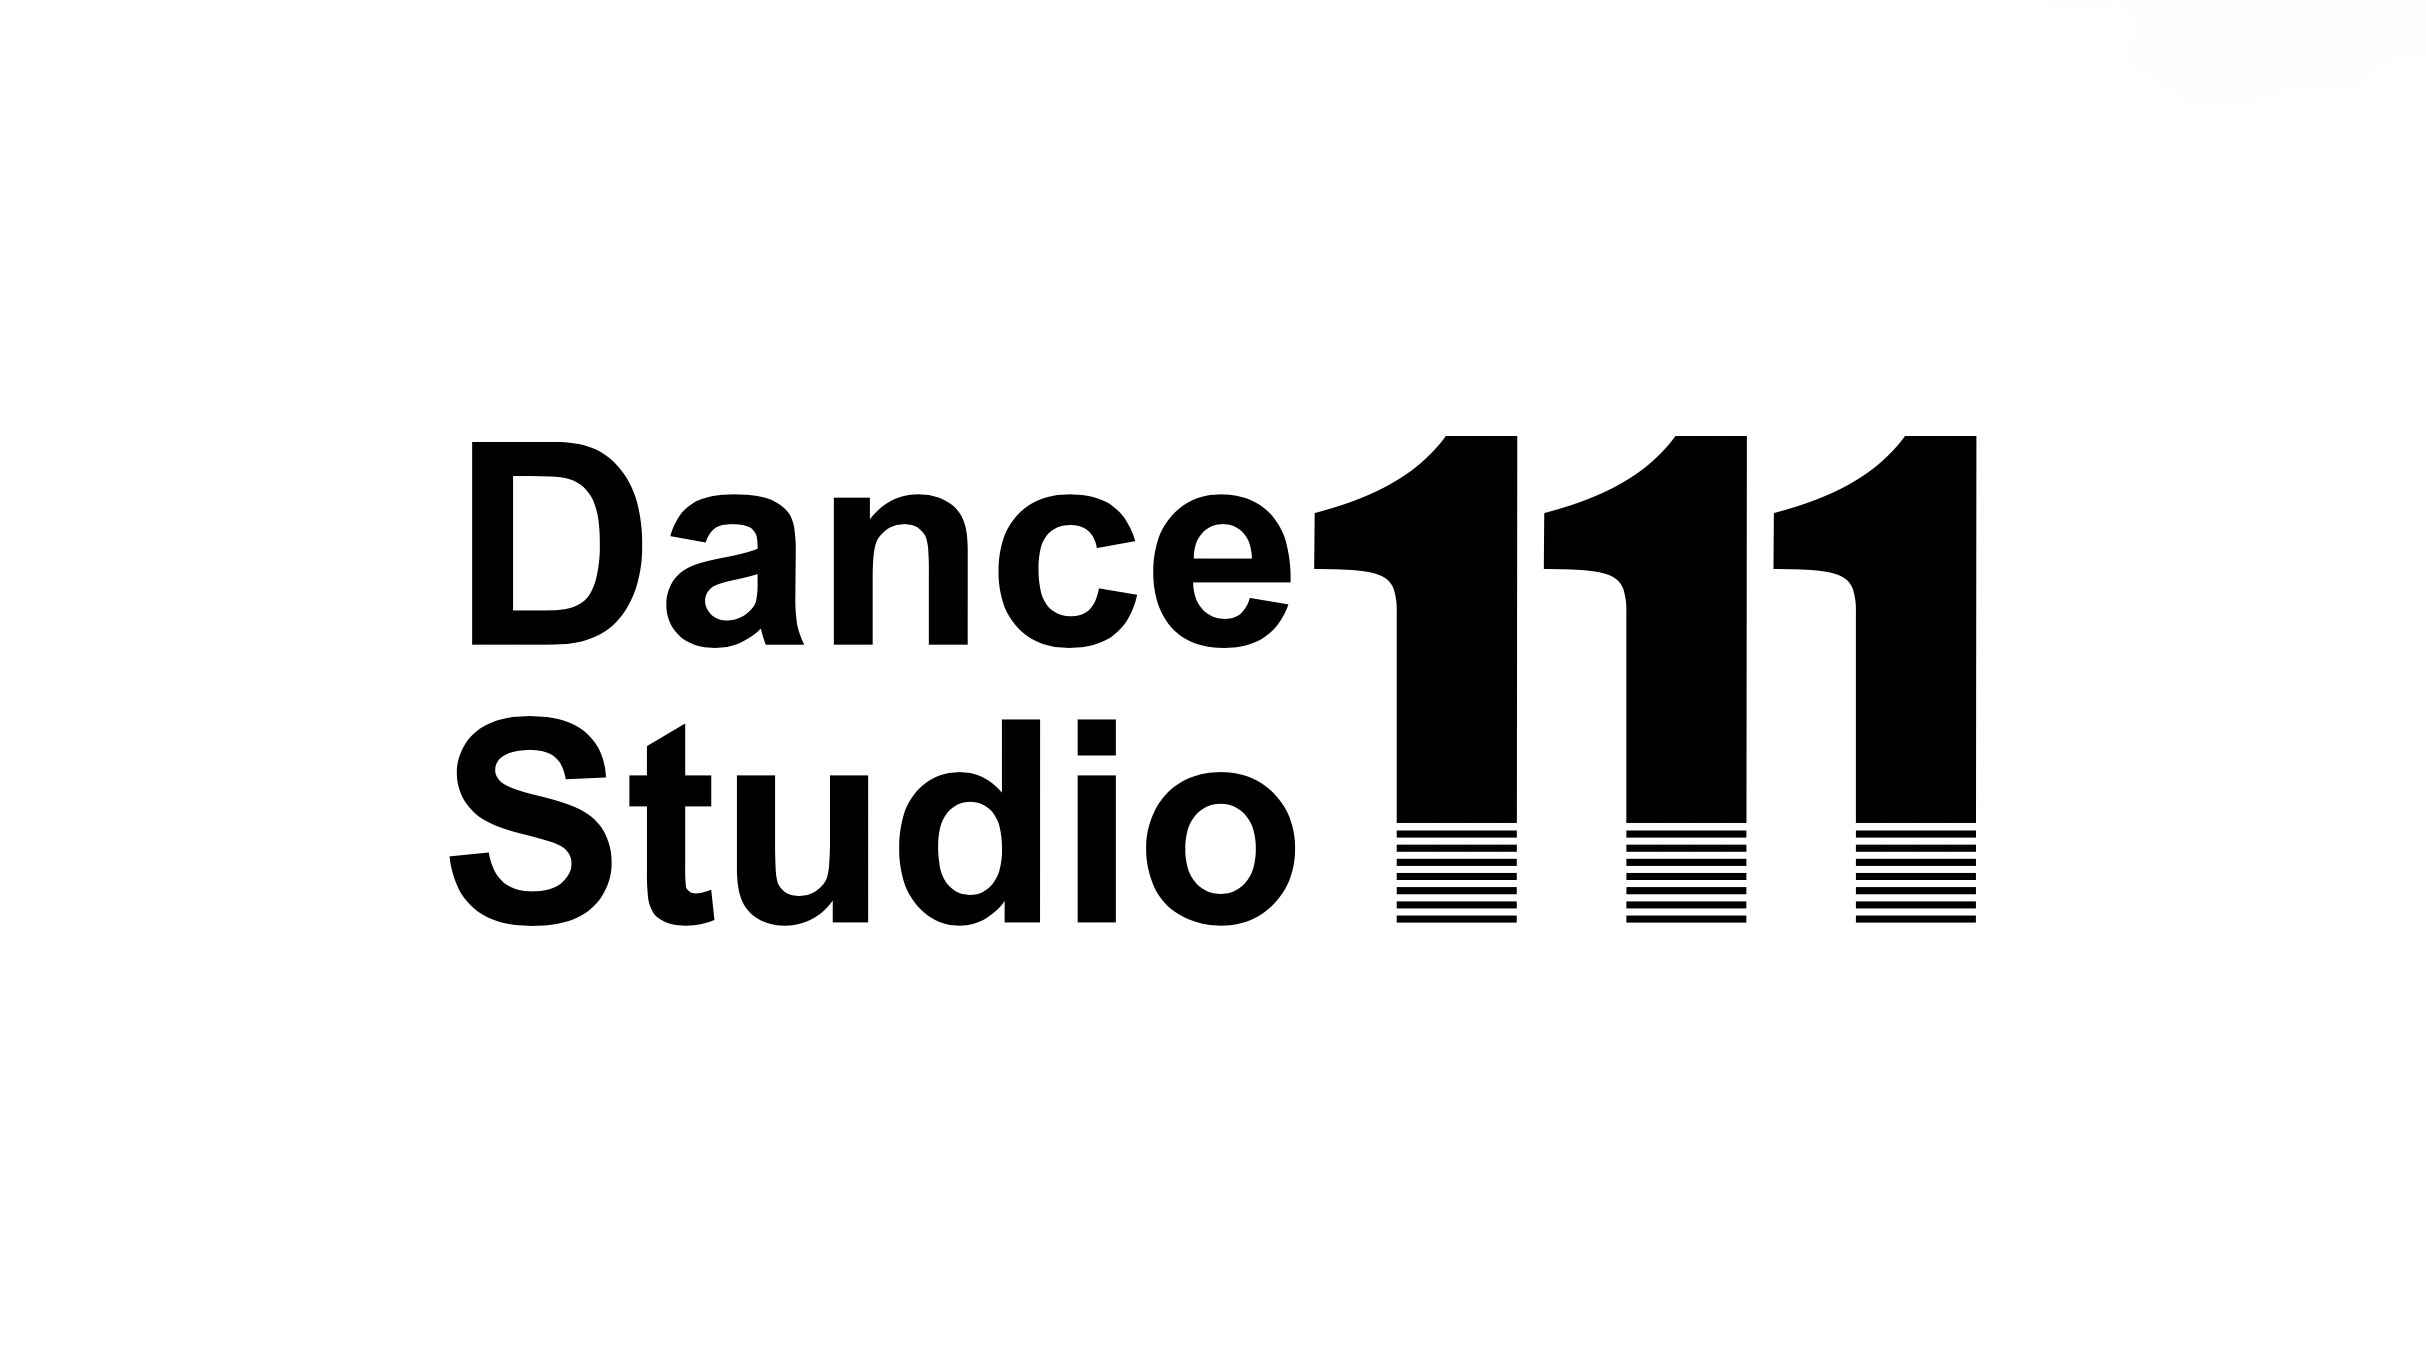 Dance Studio 111